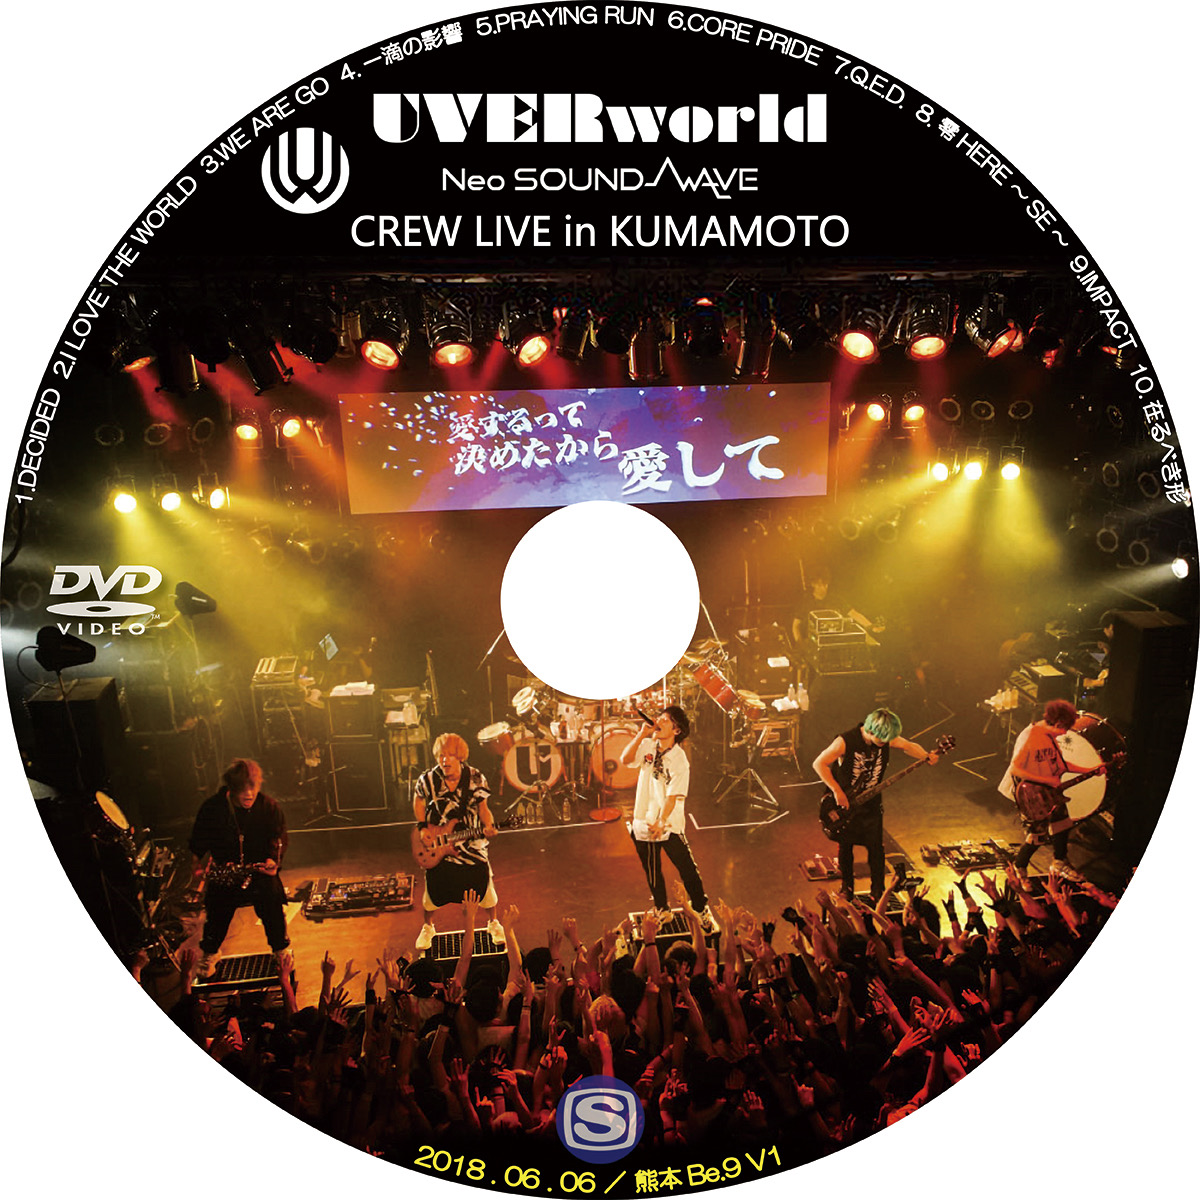 Uverworld Neo Sound Wave Crew Live In Kumamoto Fc限定ライブ スペースシャワーtv レーベル屋さん